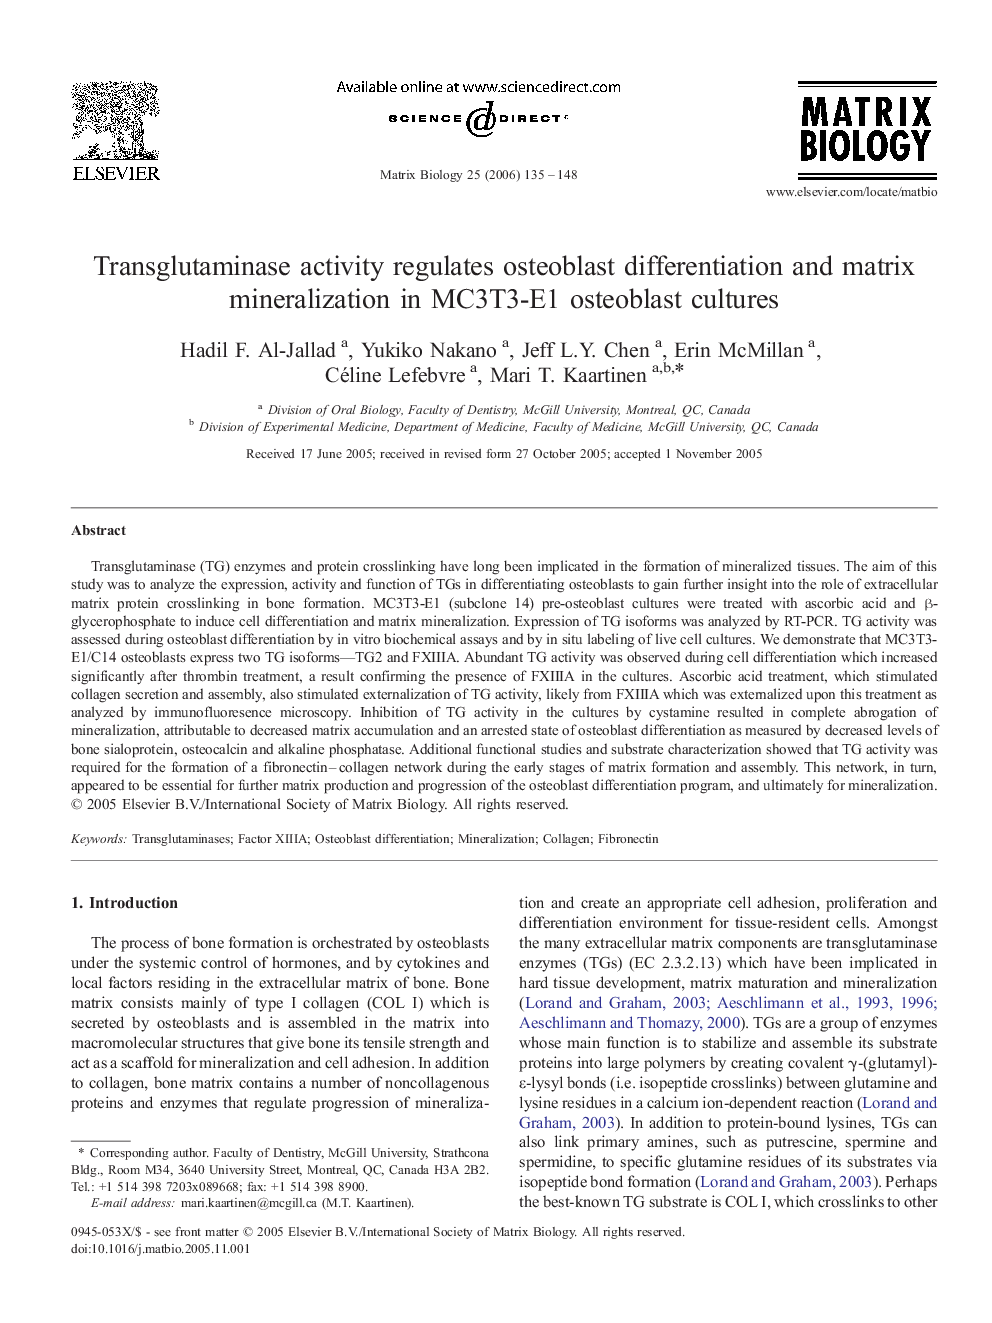 Transglutaminase activity regulates osteoblast differentiation and matrix mineralization in MC3T3-E1 osteoblast cultures